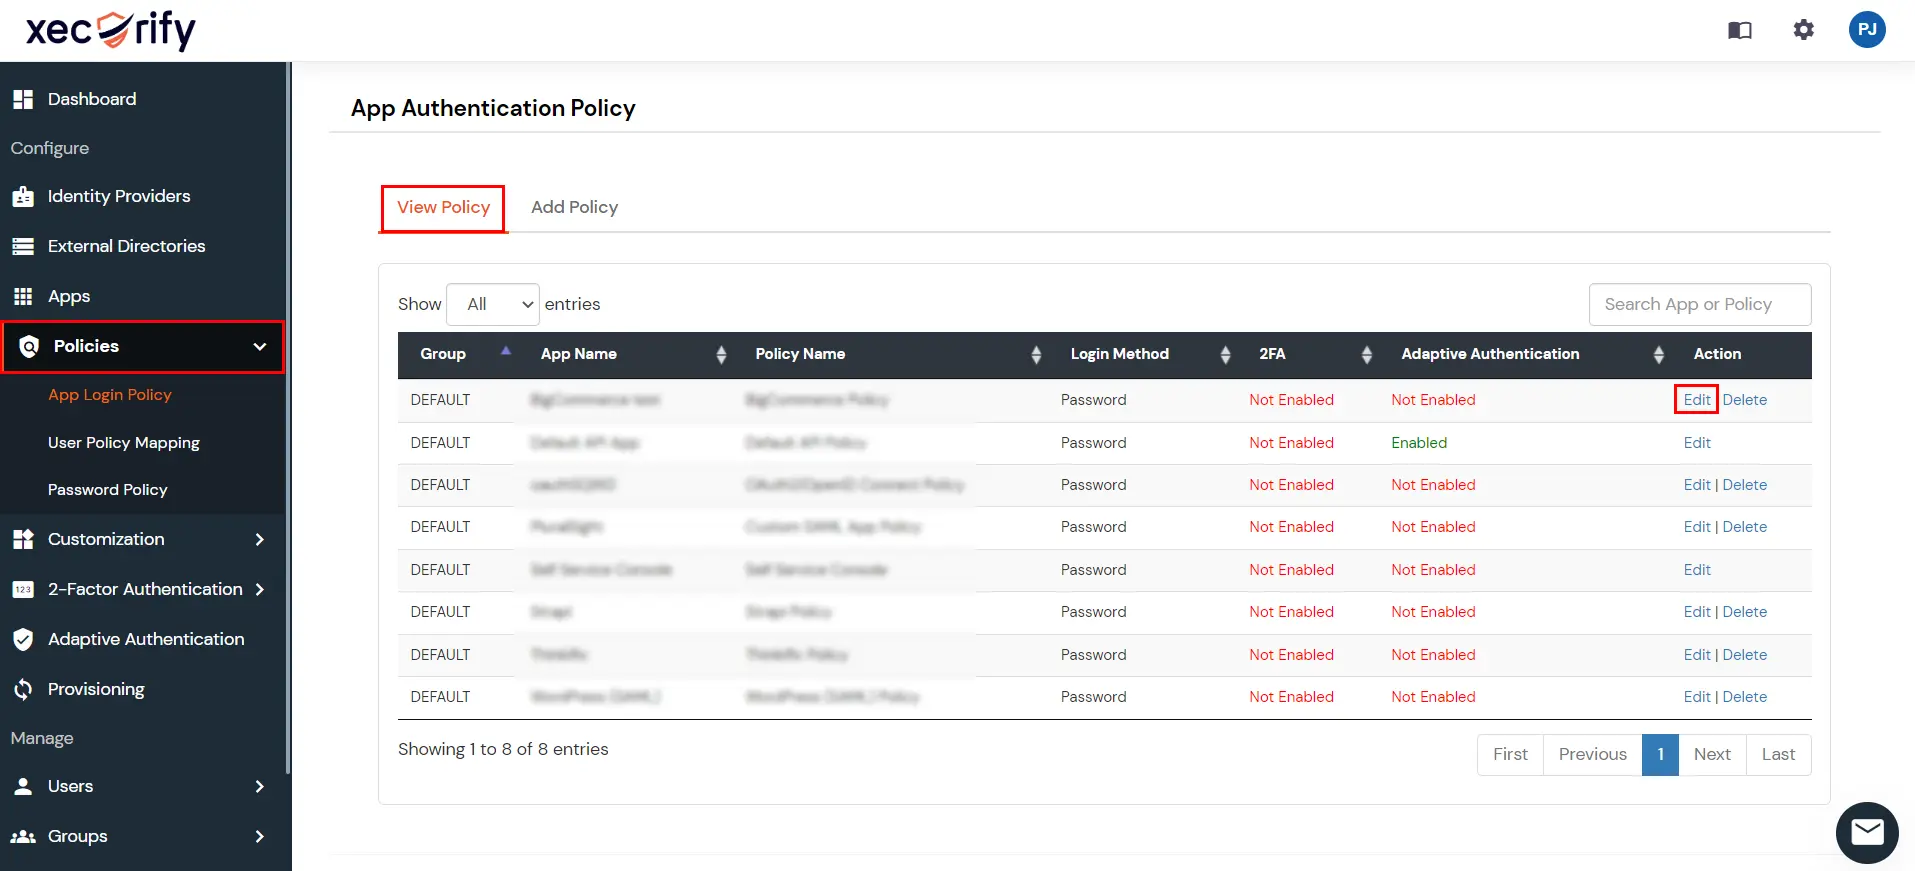 miniorange Identity Platform Admin Handbook: Edit policy